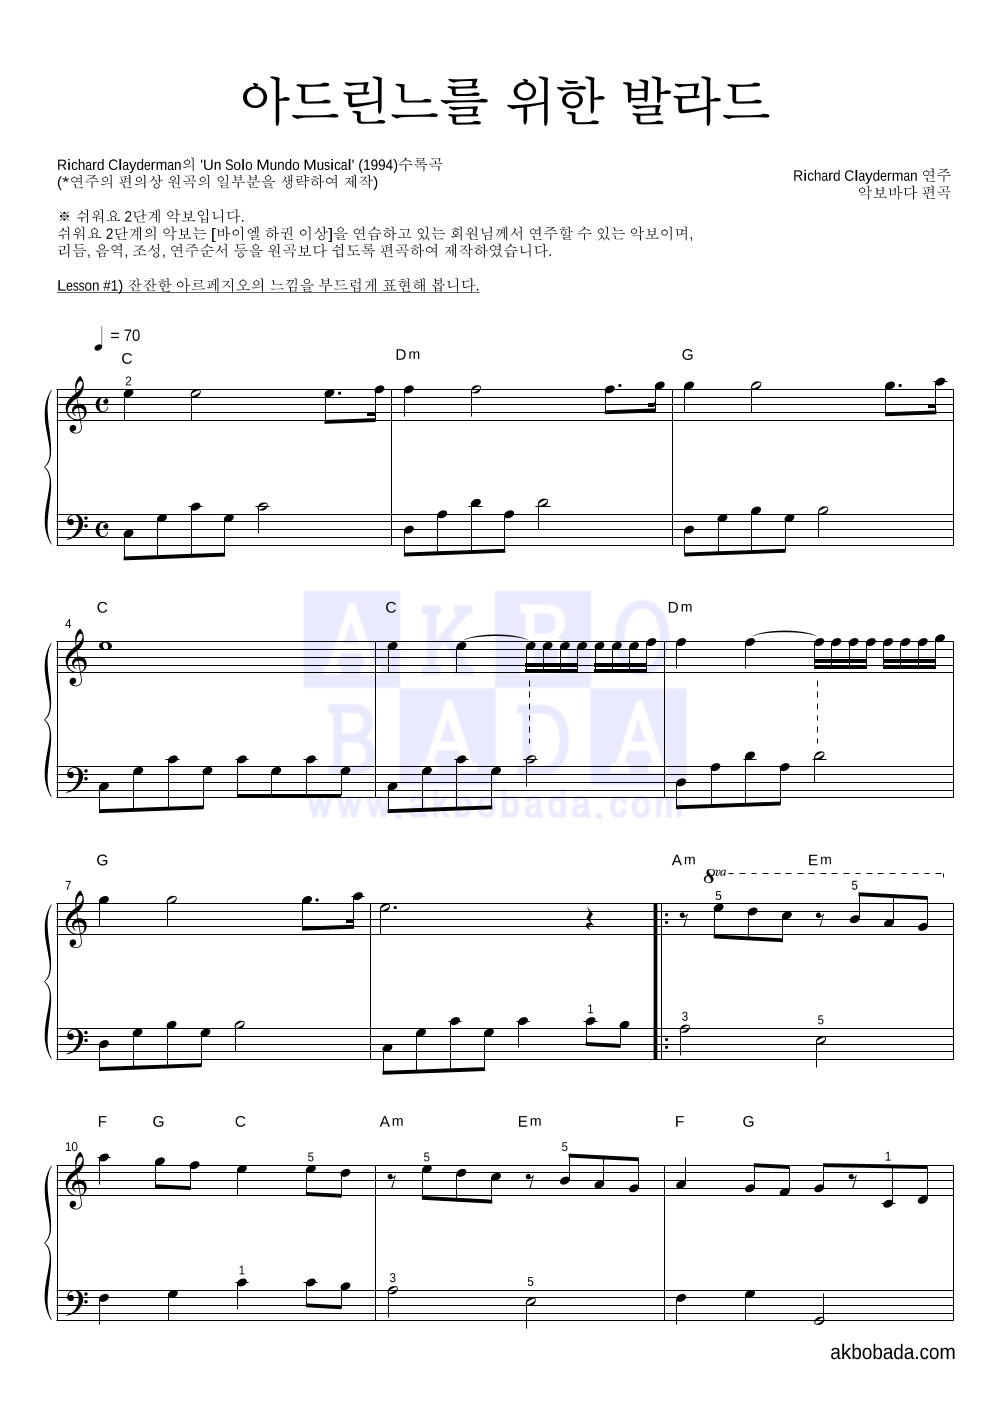 Richard Clayderman  - 아드린느를 위한 발라드 피아노2단-쉬워요 악보 